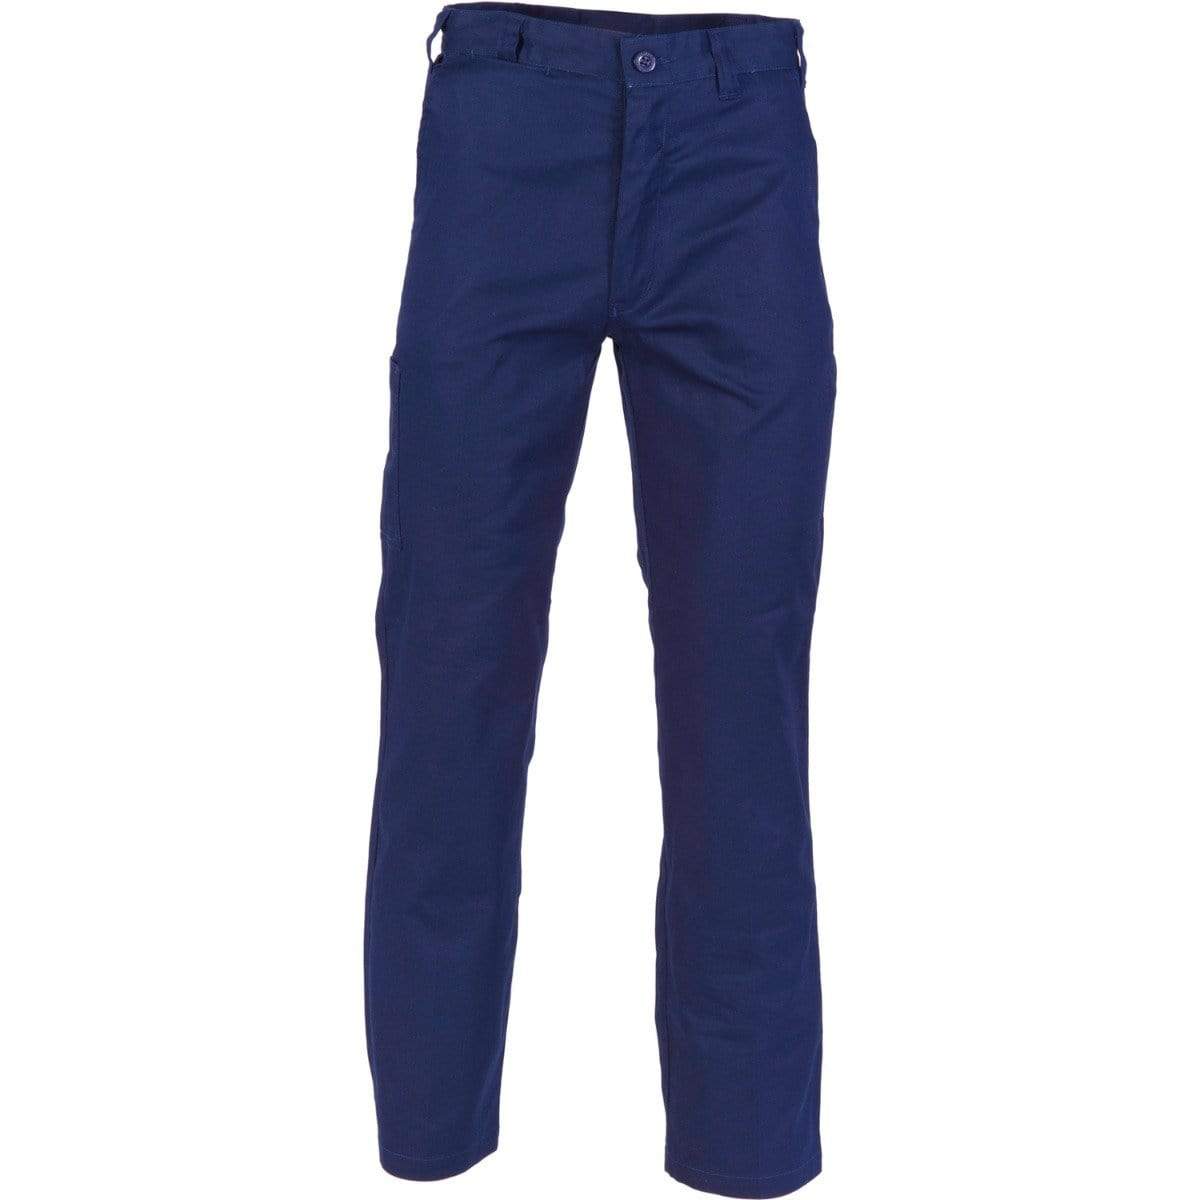 Dnc Workwear Lightweight Cotton Work Pants - 3329 Work Wear DNC Workwear Navy 72R 